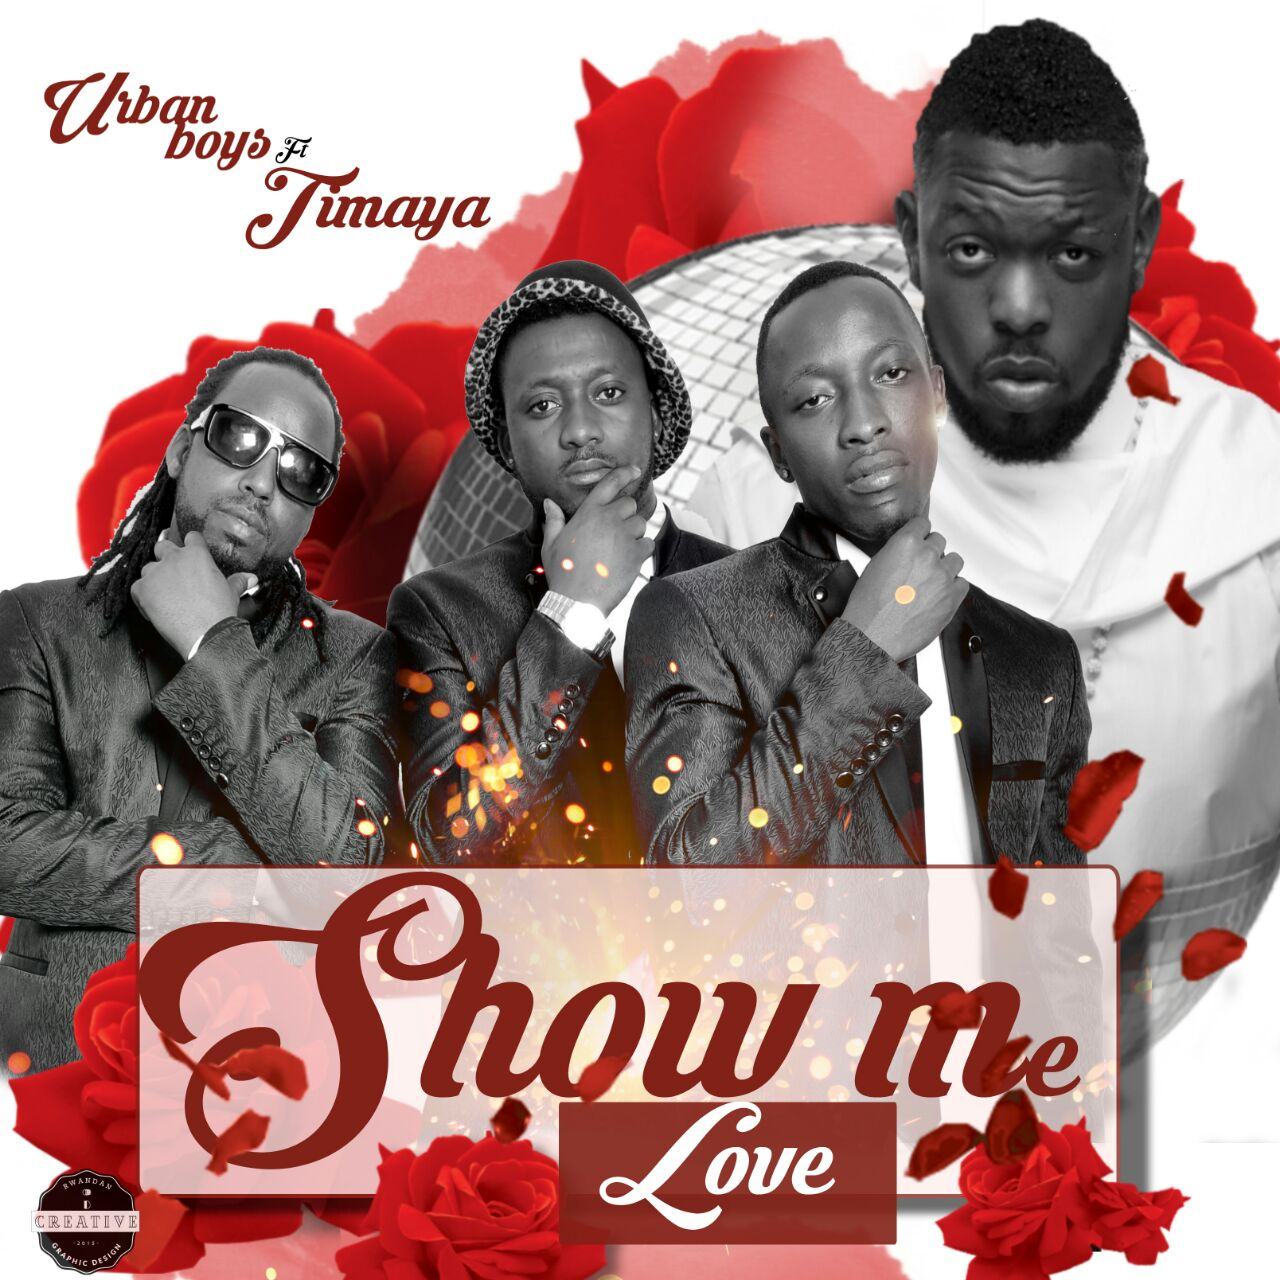 Urban Boys - Show Me Love ft Timaya [AuDio]